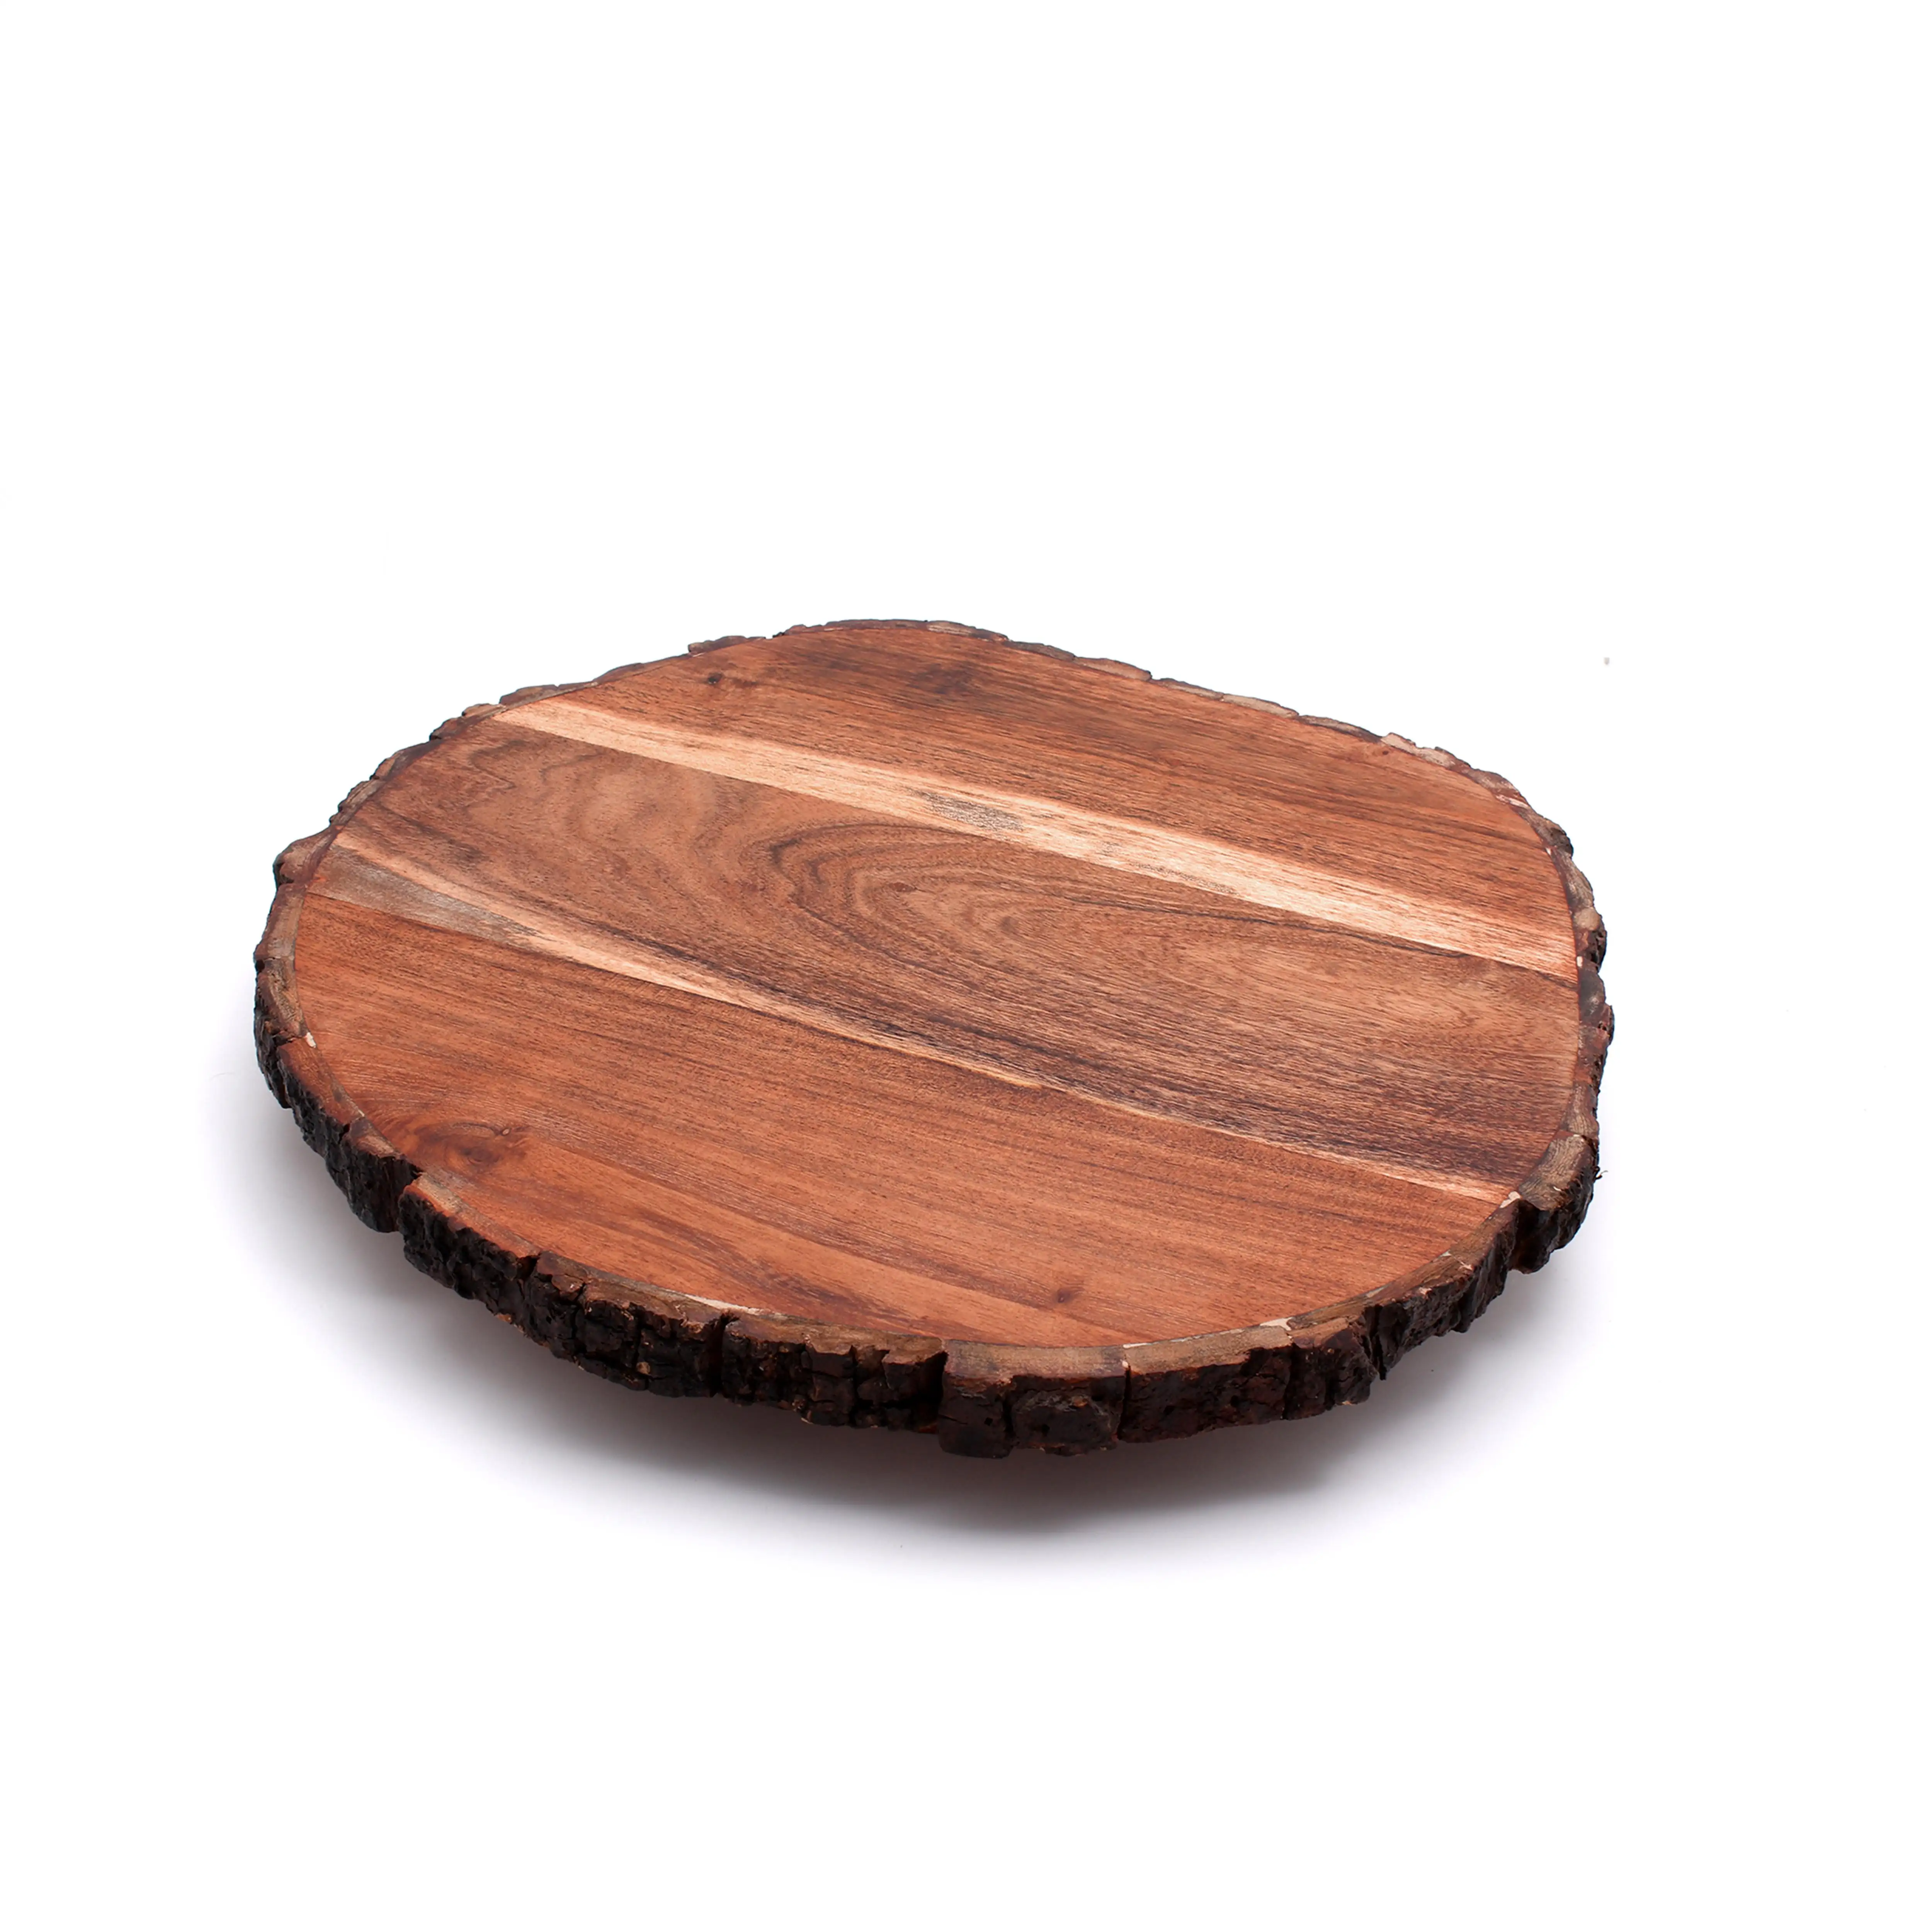 Akasya ahşap kesme tahtası yükseltici ağaç kabuğu ve bacaklar 35x35x5 cm yuvarlak ahşap kesme tahtası doğal ahşap servis tepsisi